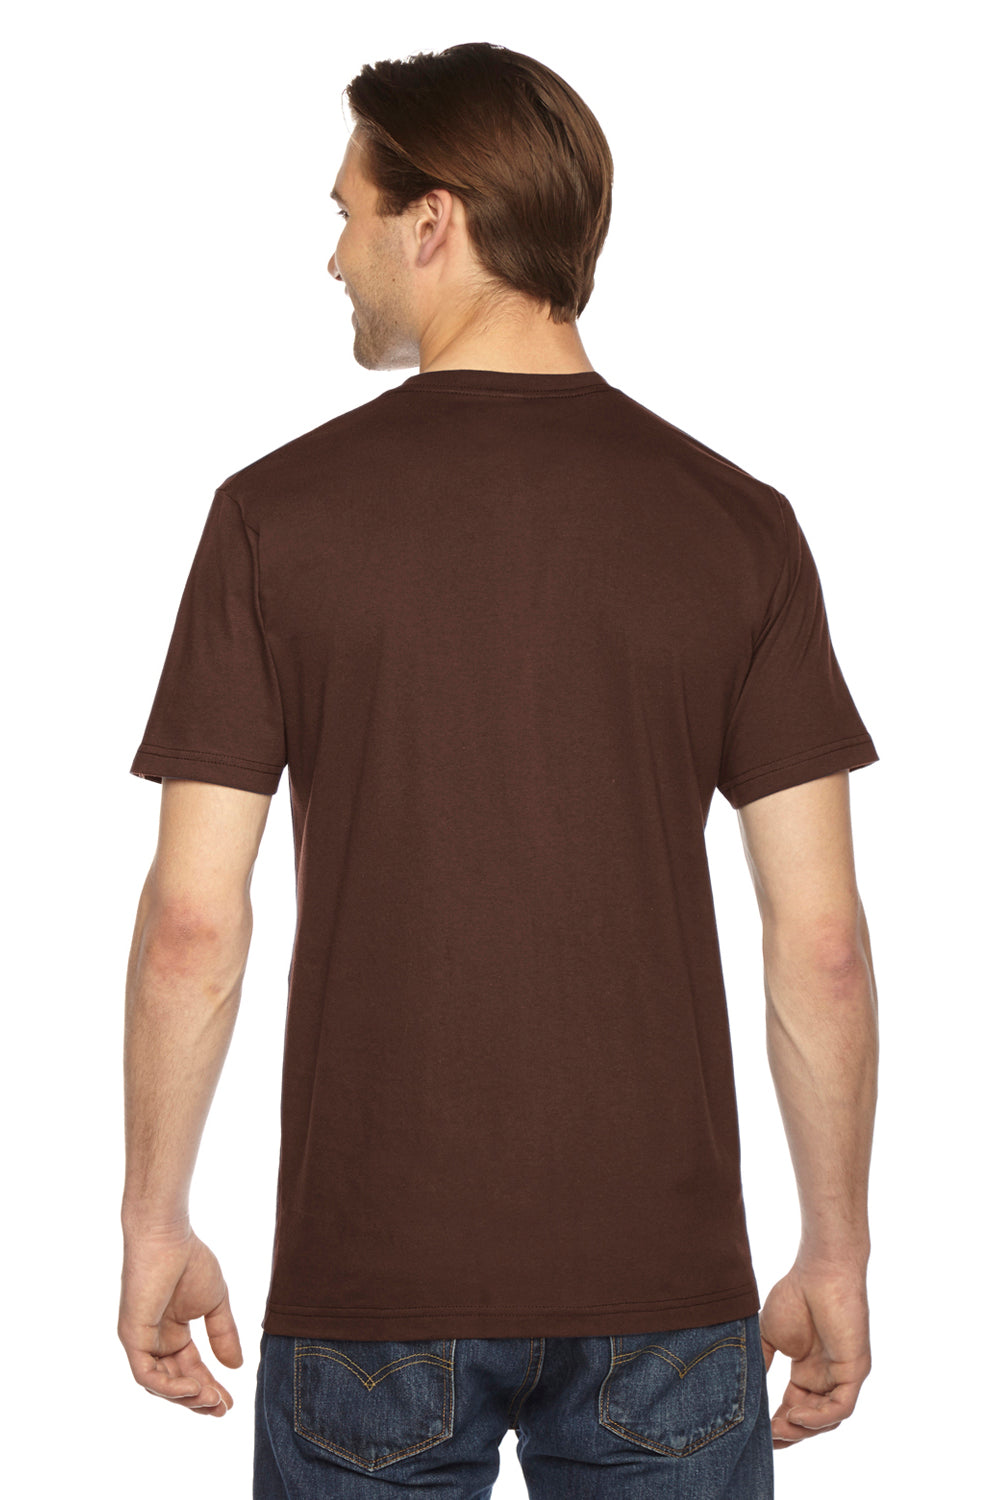 American Apparel 2001 Mens Fine Jersey Short Sleeve Crewneck T-Shirt Brown Model Back